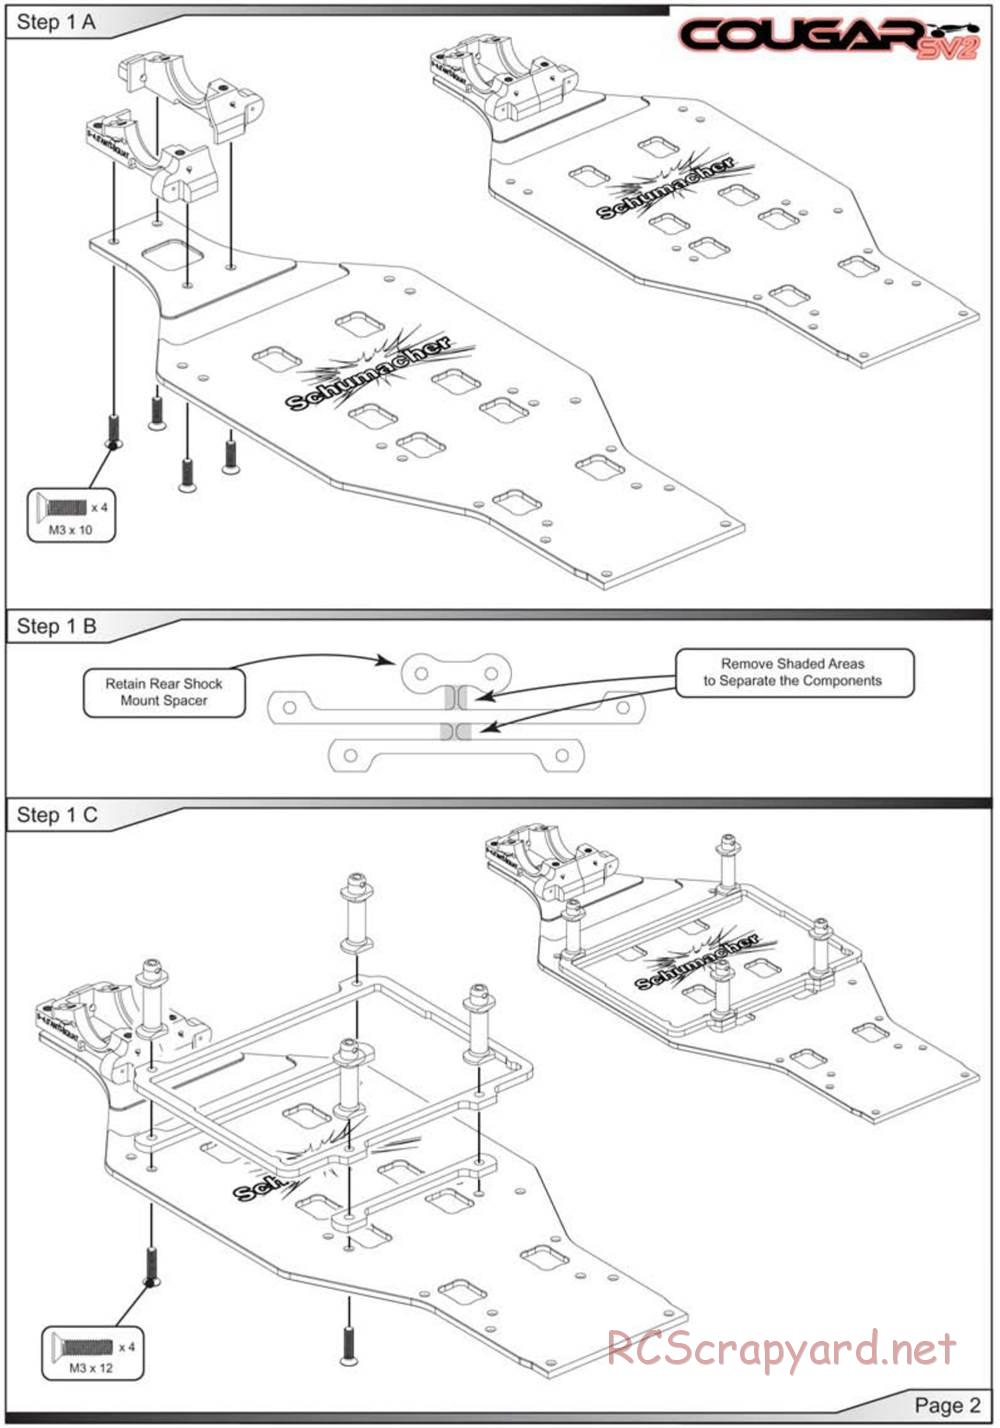 Schumacher - Cougar SV2 - Manual - Page 3